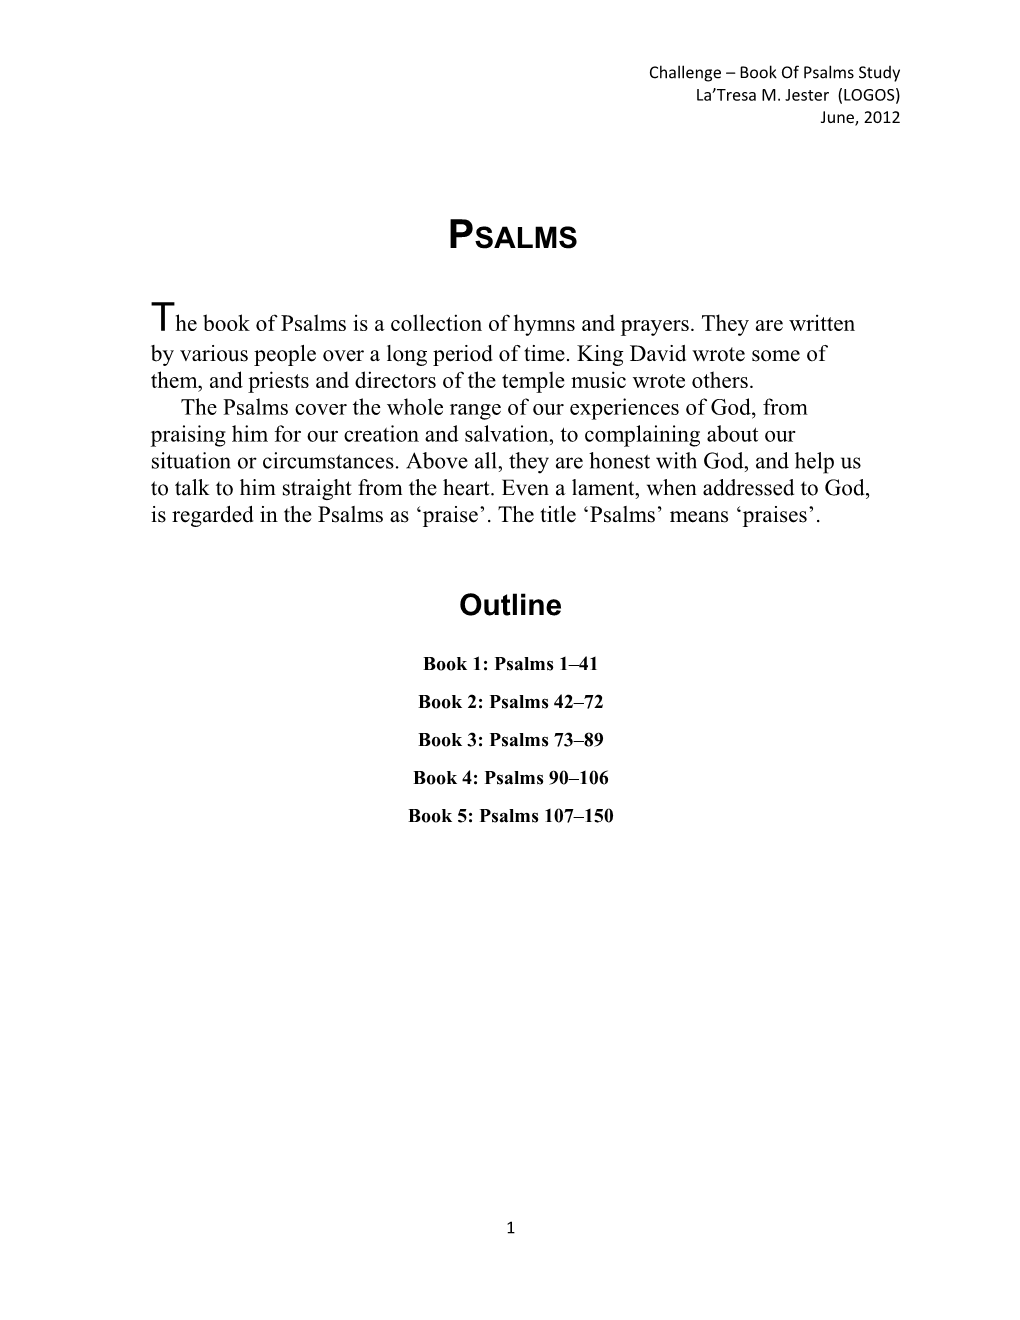 Challenge Book of Psalms Study